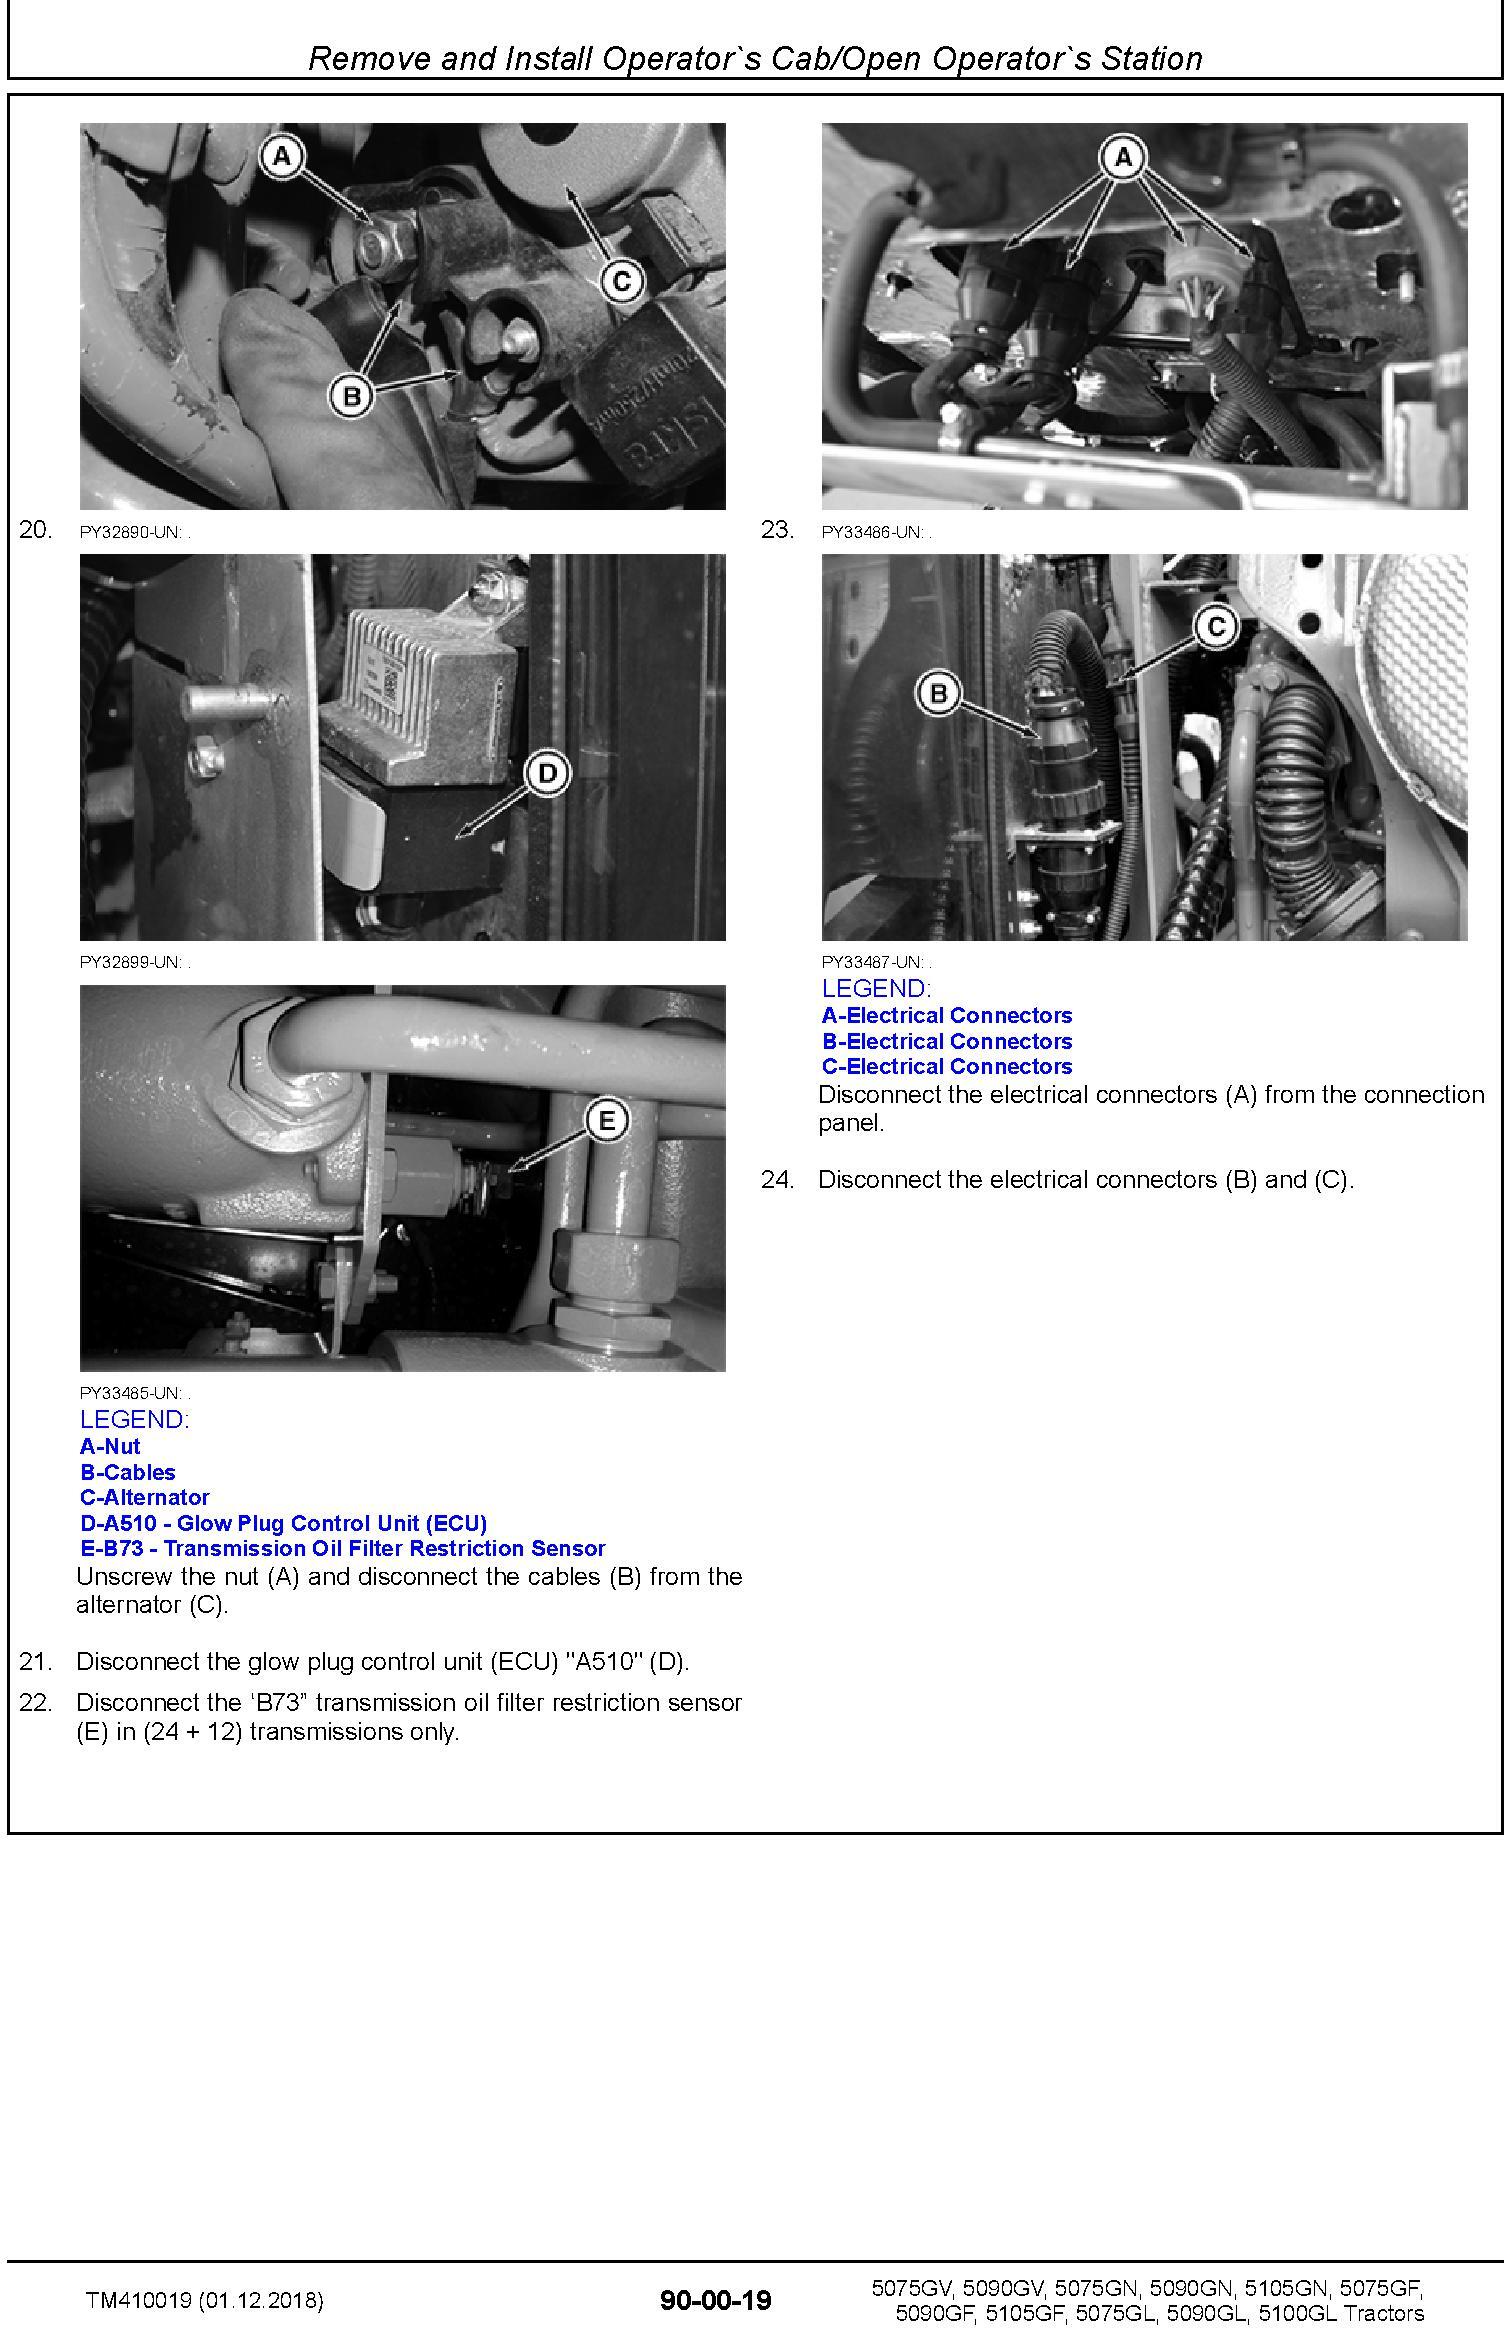 John Deere 5075GF/L/N/V, 5090GF/L/N/V, 5100GL, 5105GF/N Tractors Repair Technical Manual (TM410019) - 3